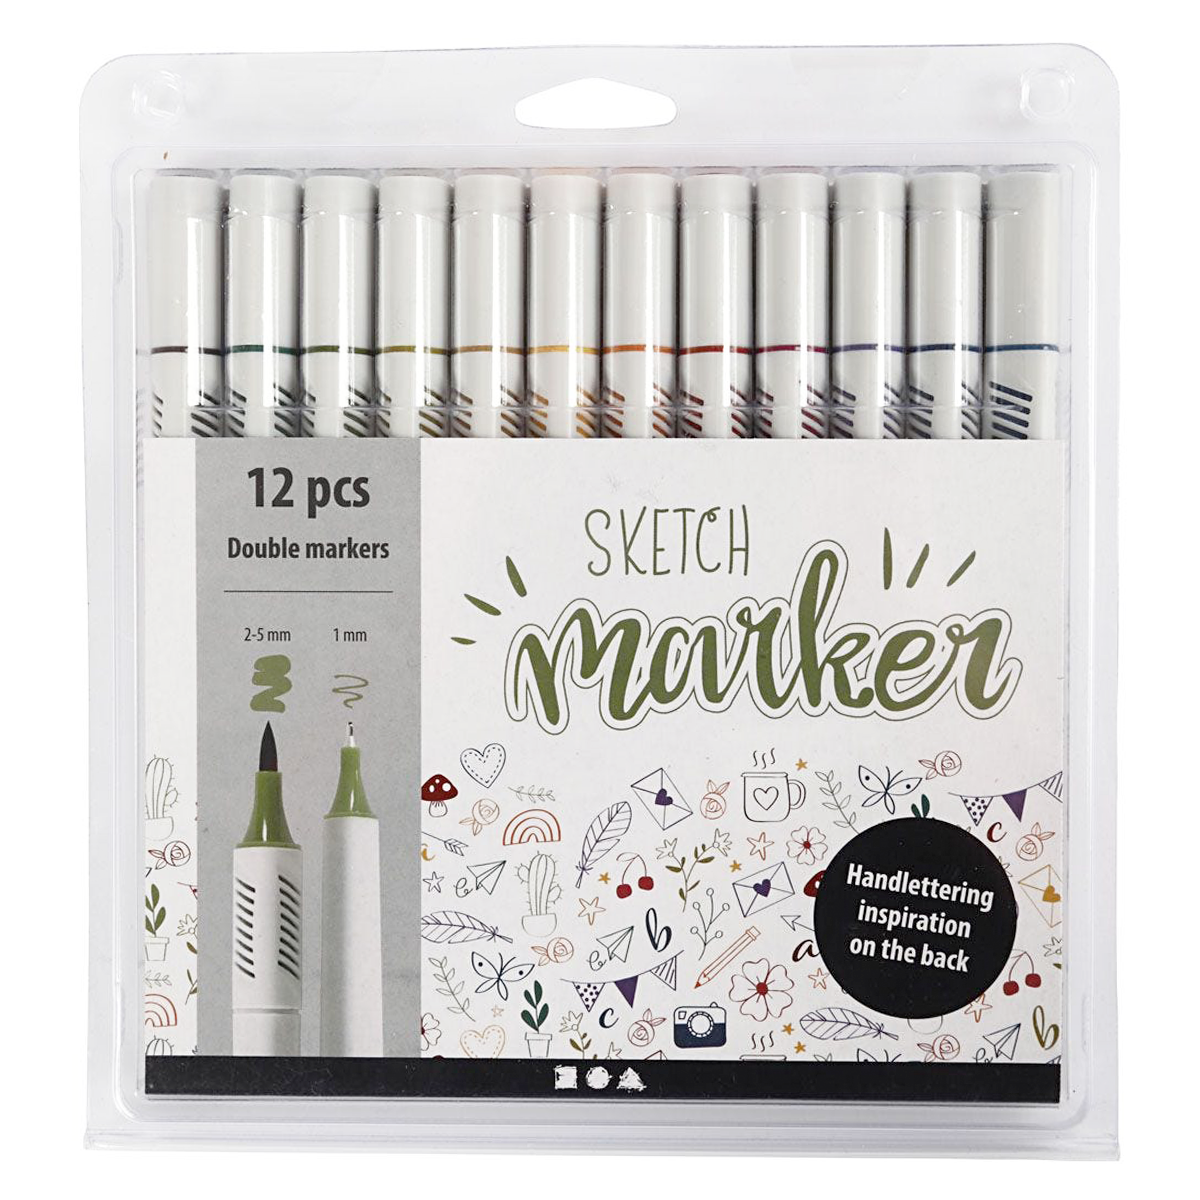 Sketch Marker Nature 12-set in the group Pens / Artist Pens / Illustration Markers at Pen Store (126475)